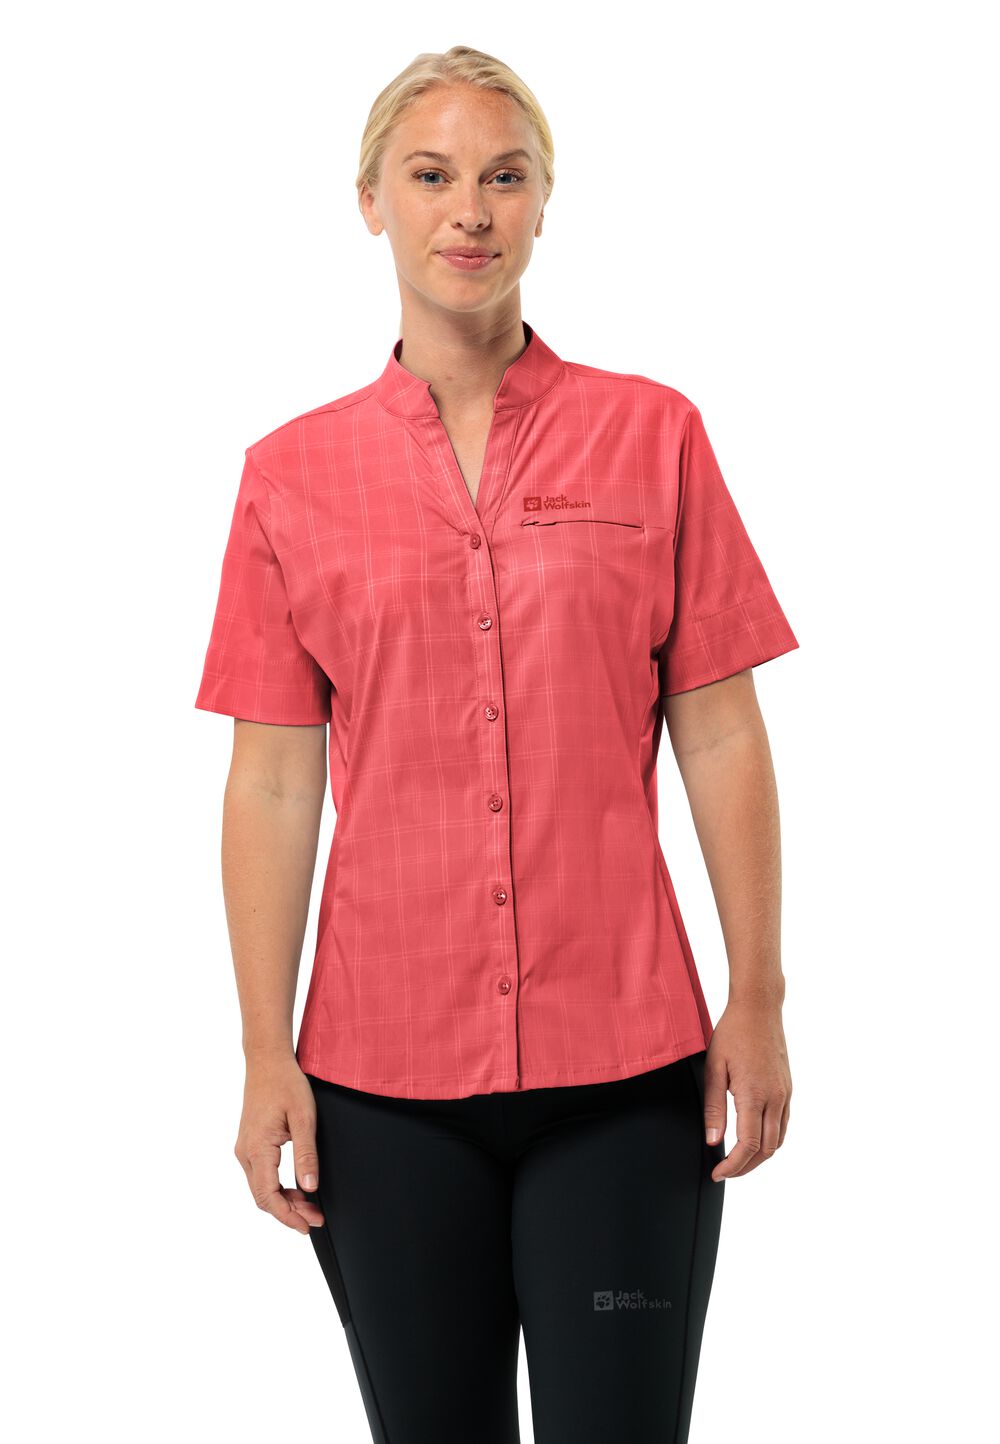 Jack Wolfskin Norbo S S Shirt Women Wandelblouse met korte mouwen Dames XXL rood vibrant red check